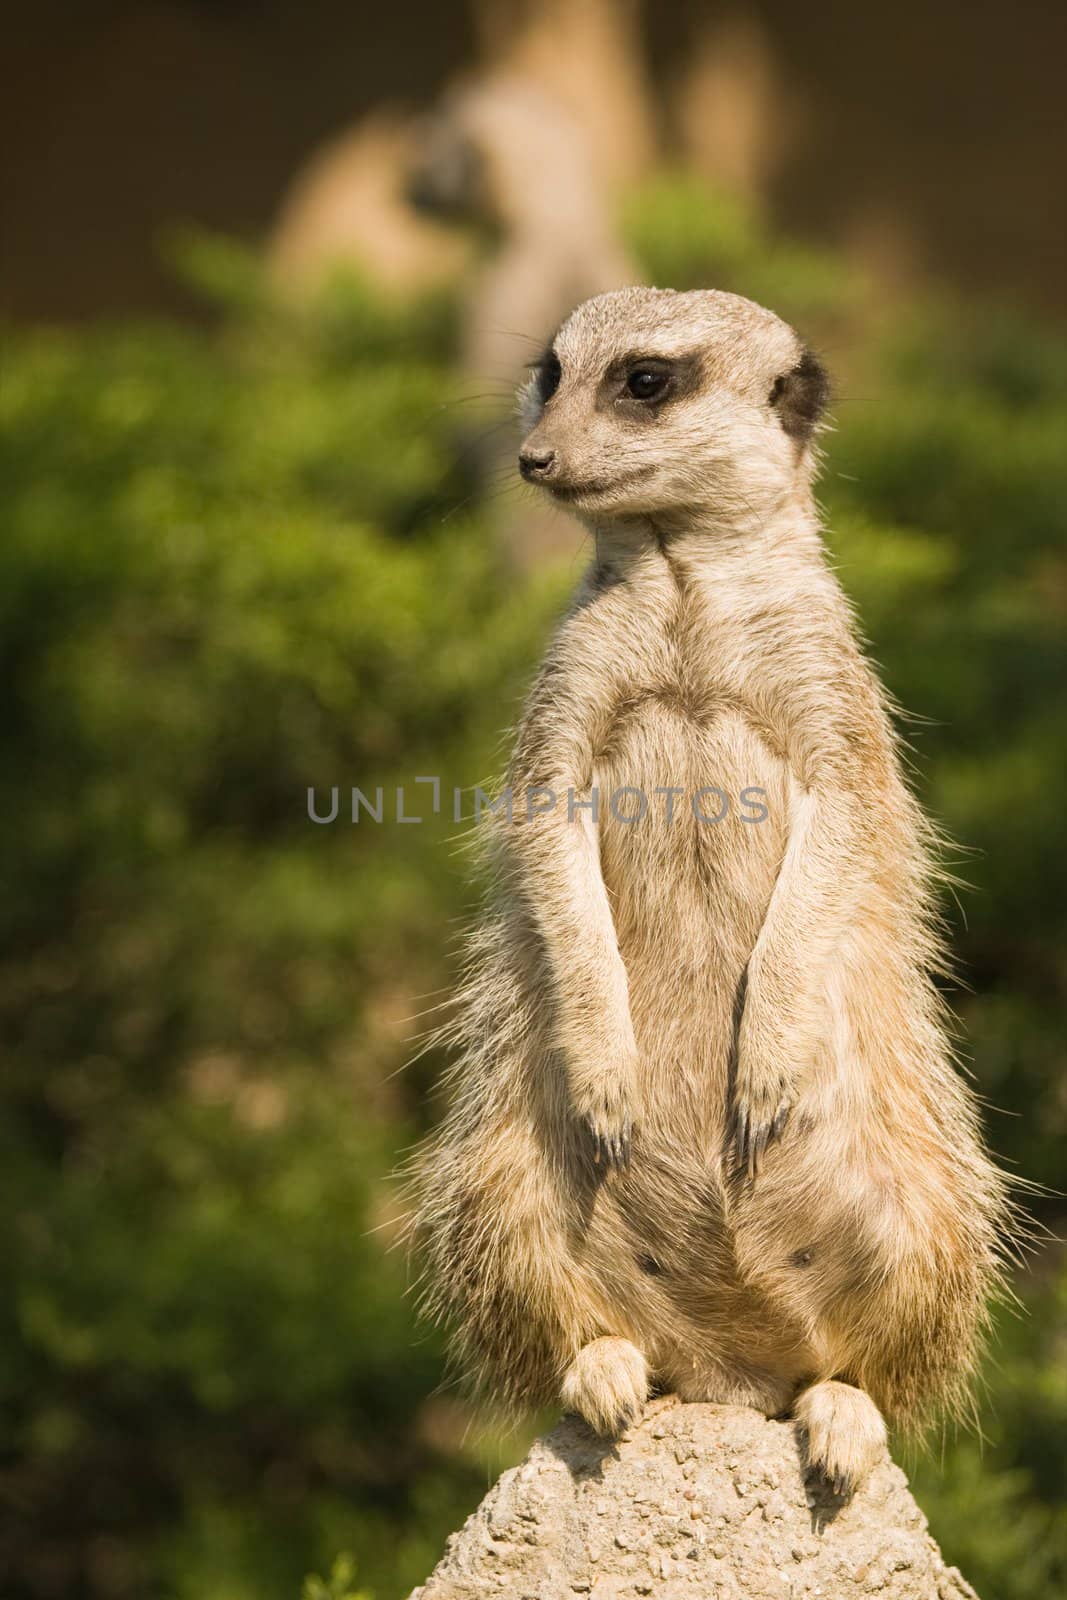 Meerkat or mongoose - female by Colette